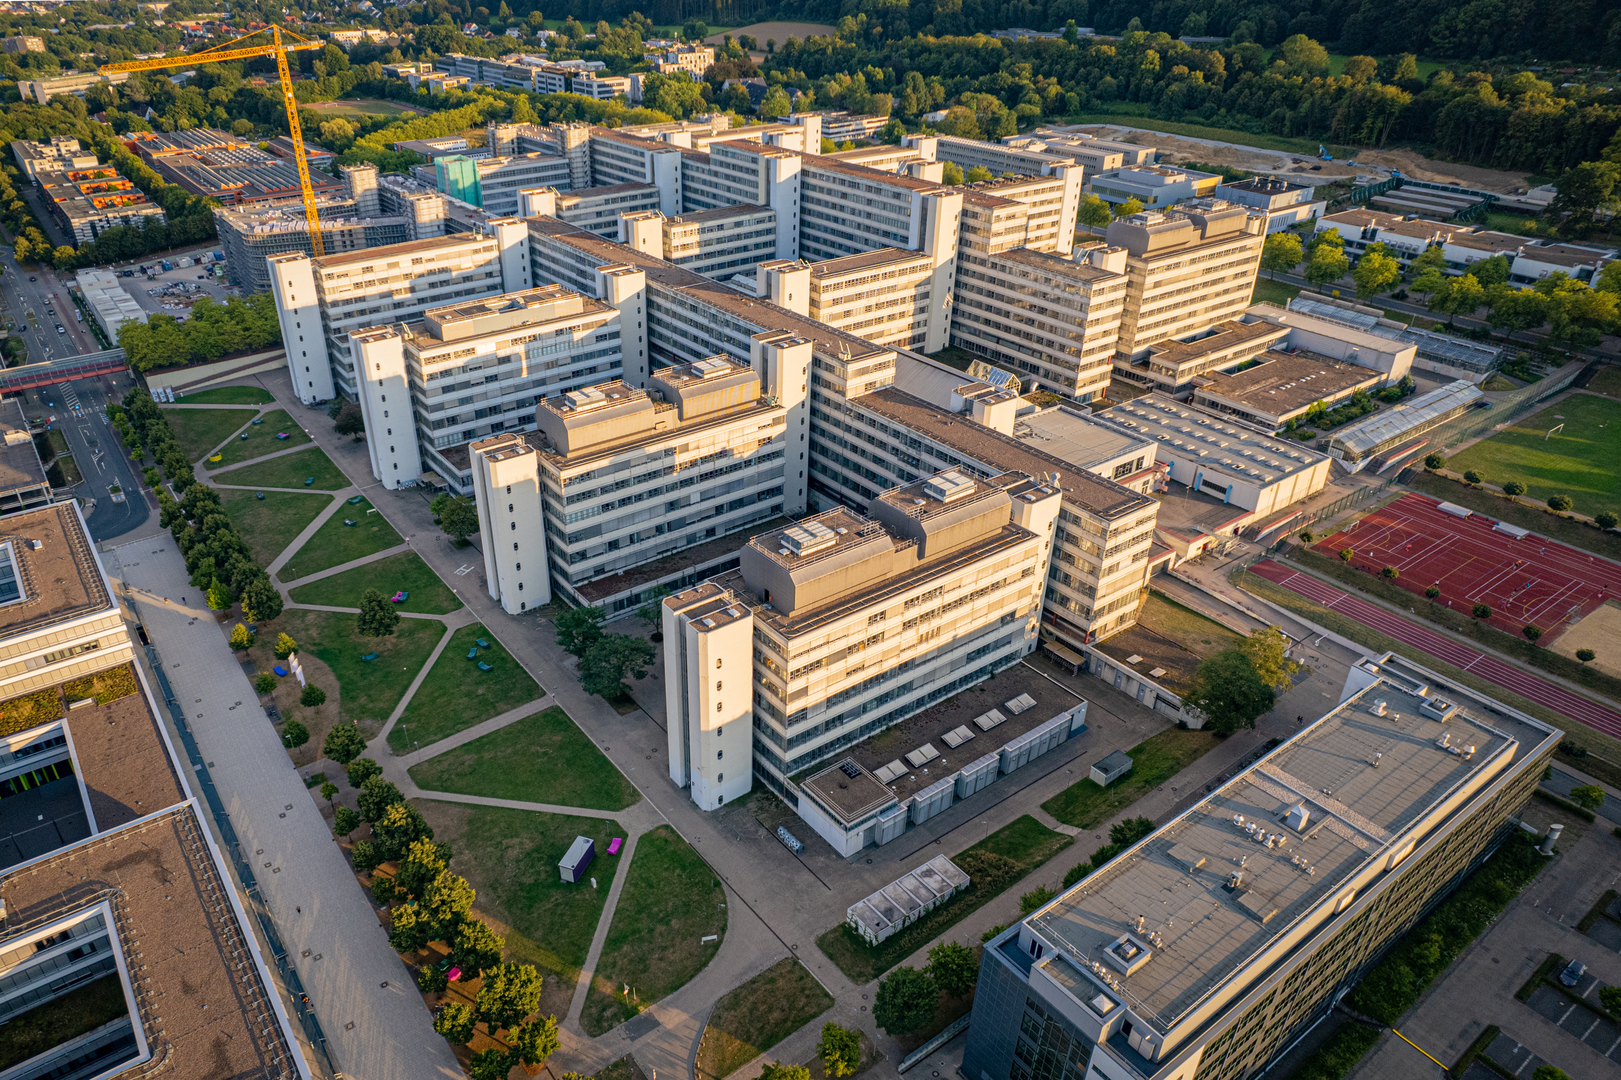 Universitt Bielefeld